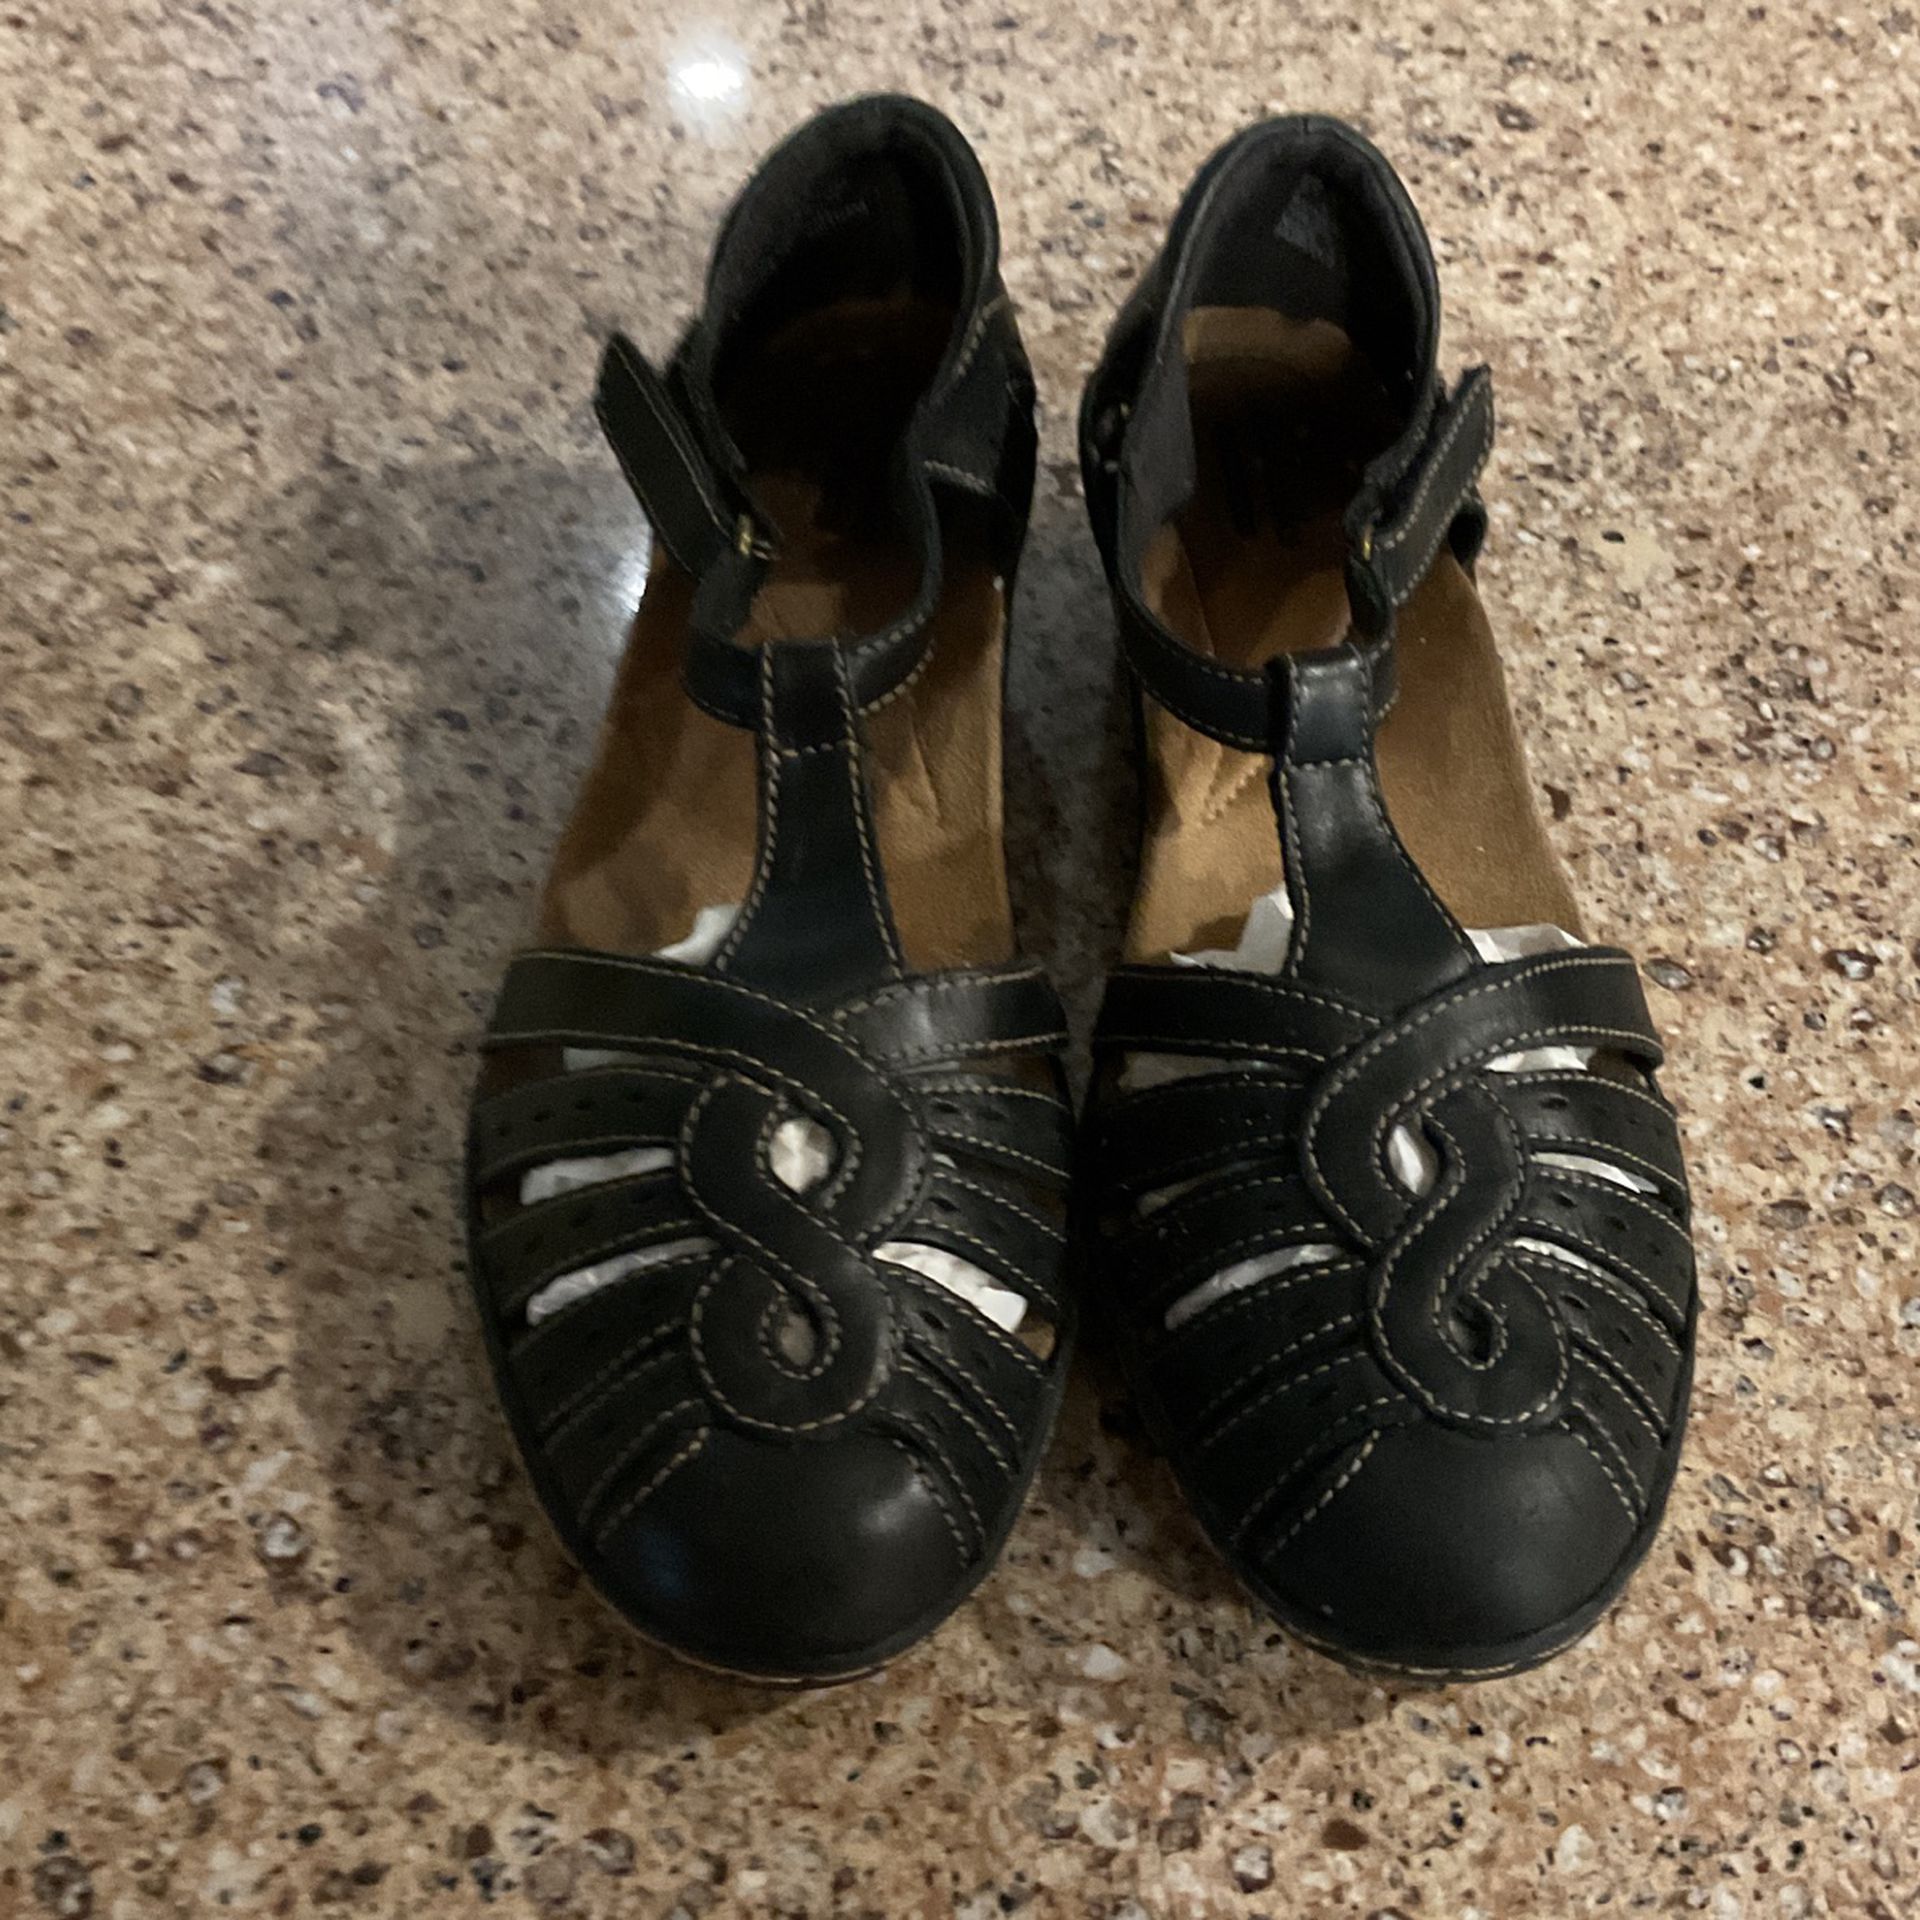 Clark’s Women’s Shoes Size 7N